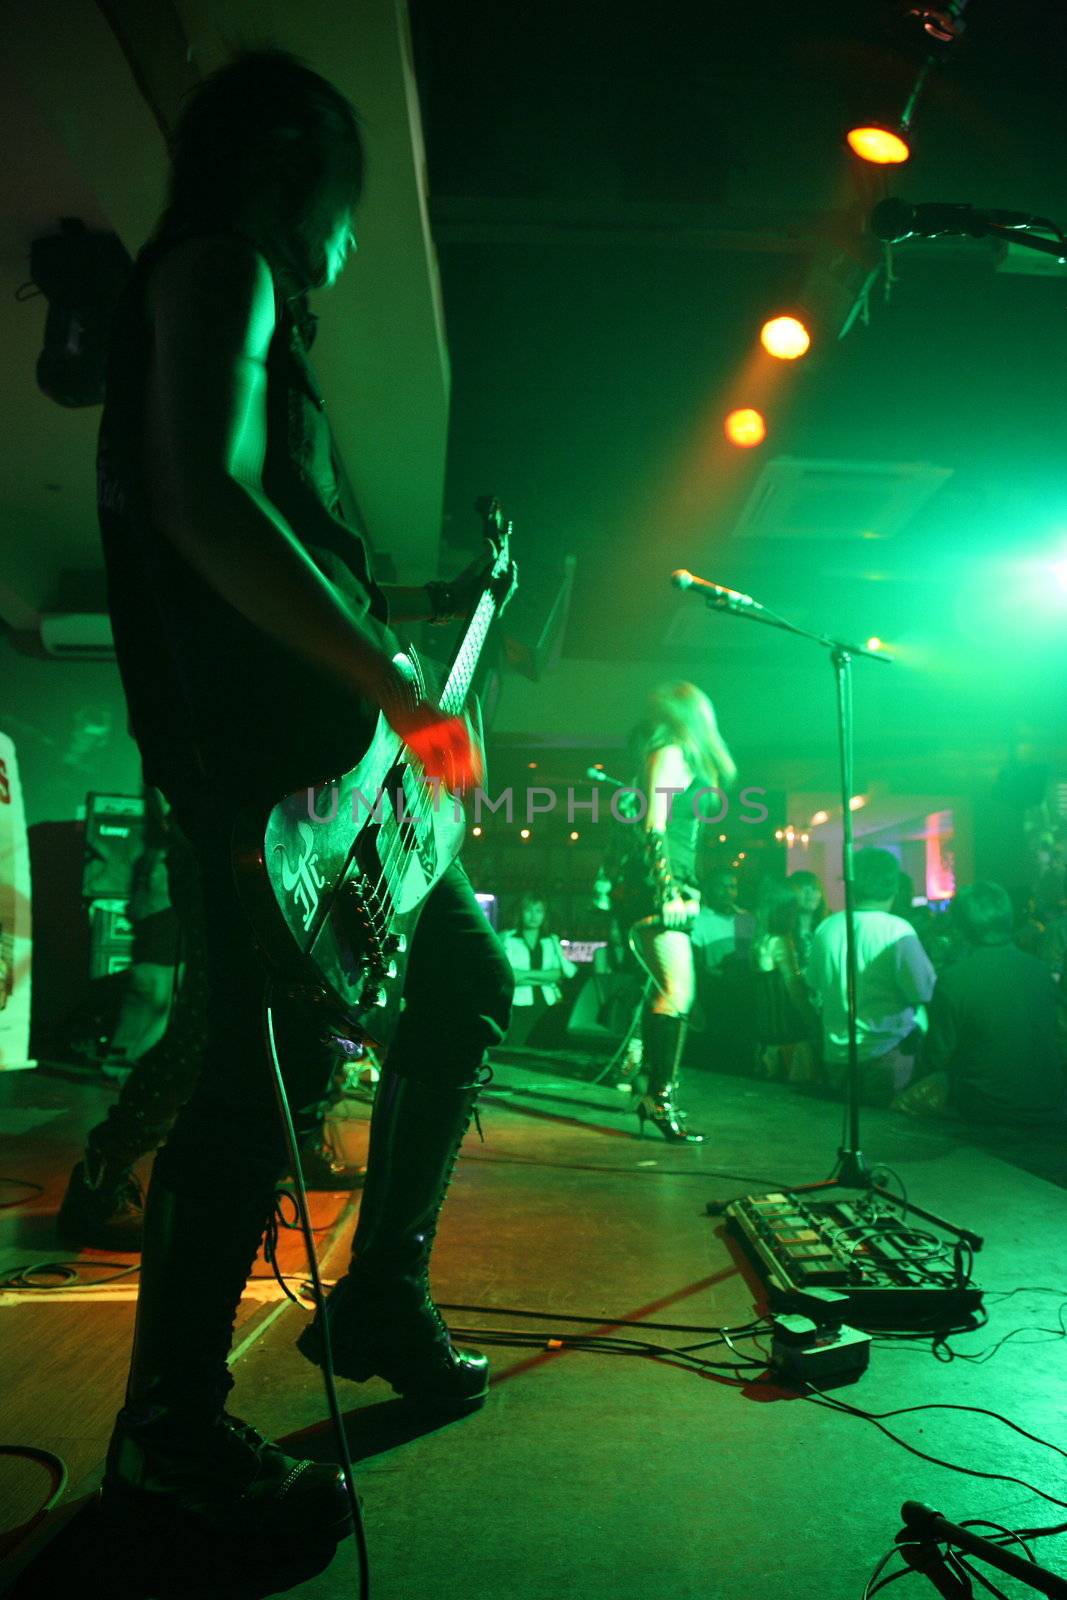 green hue rock concert in a club